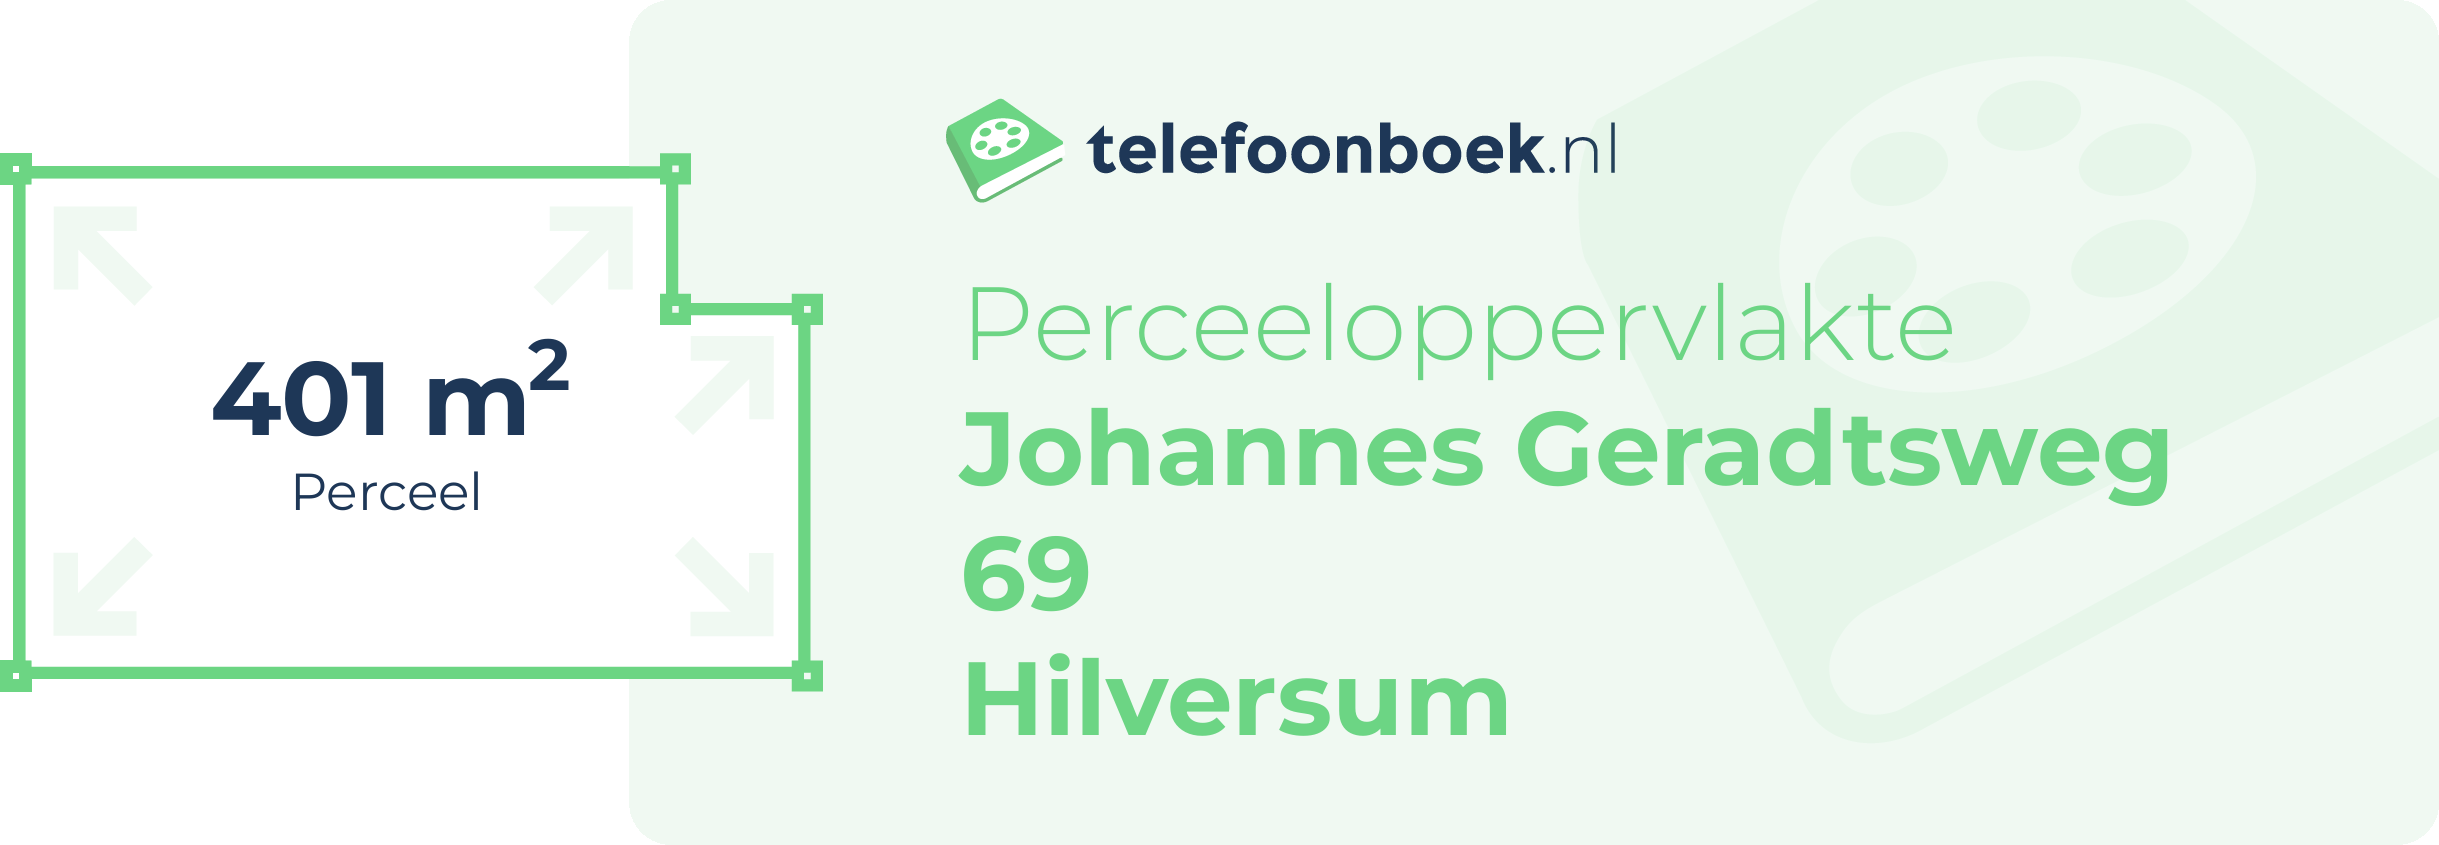 Perceeloppervlakte Johannes Geradtsweg 69 Hilversum